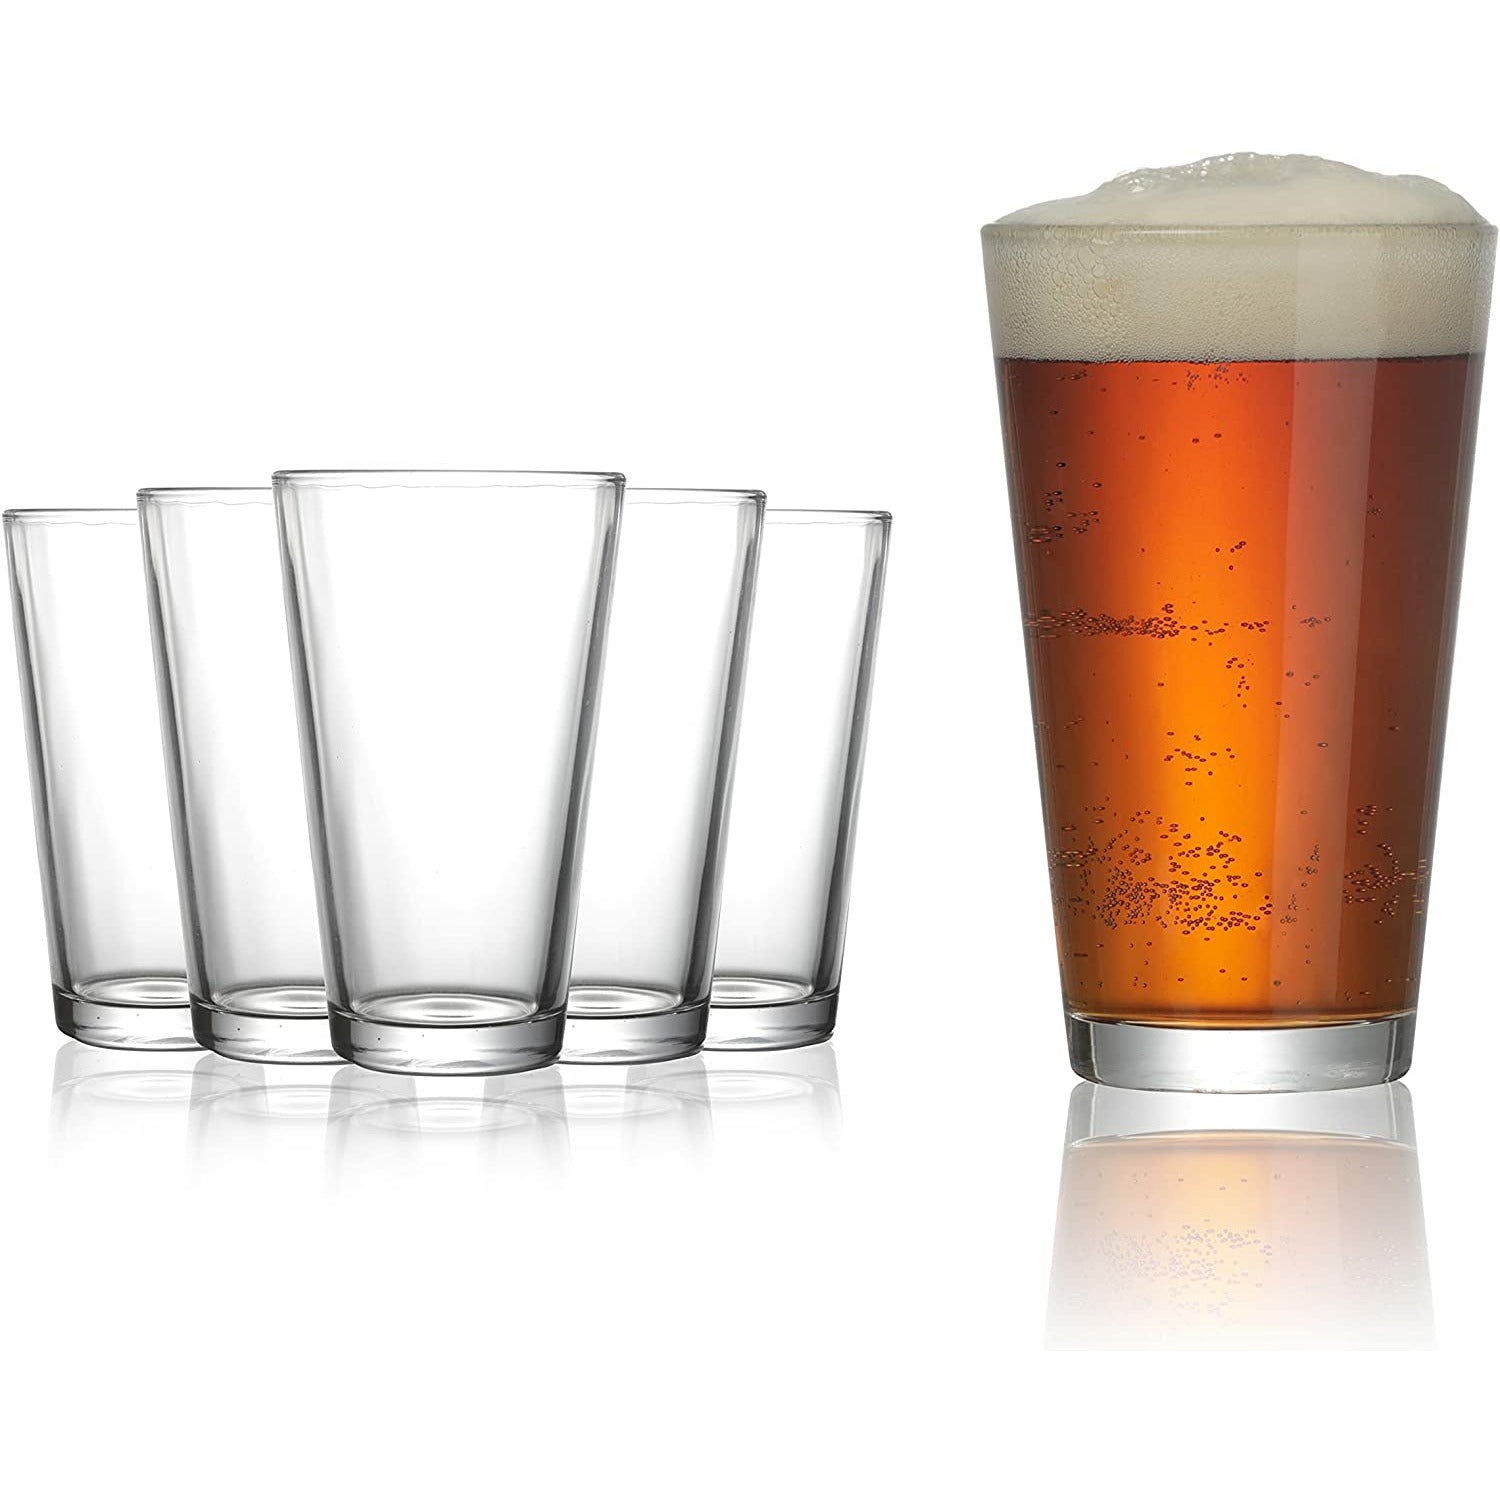 Mainstream Source Classic Pint Glasses – 16oz Pint Glass Set  w/Classic Design for Beer, Margaritas, Sodas & More, Premium Freeze Beer  Glasses Set, Restaurant Quality Glassware (Set of 4): Beer